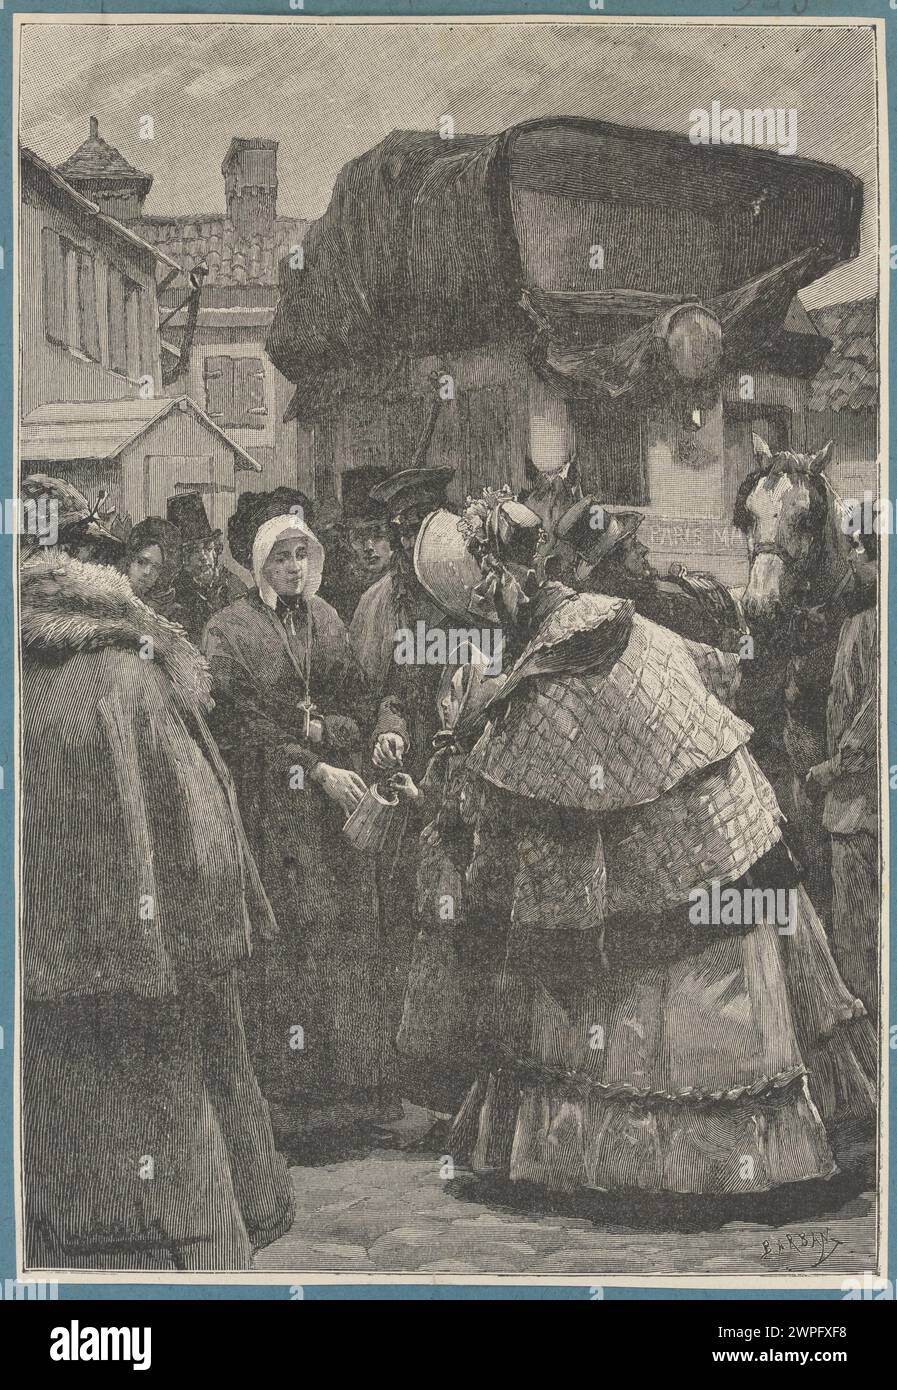 Issue on the street; Barbant, Charles (1844-1922), Myrbach-Rheinfeld, Felician von (1853-1940); 1880-1900 (1880-00-00-1900-00-00); Stock Photo